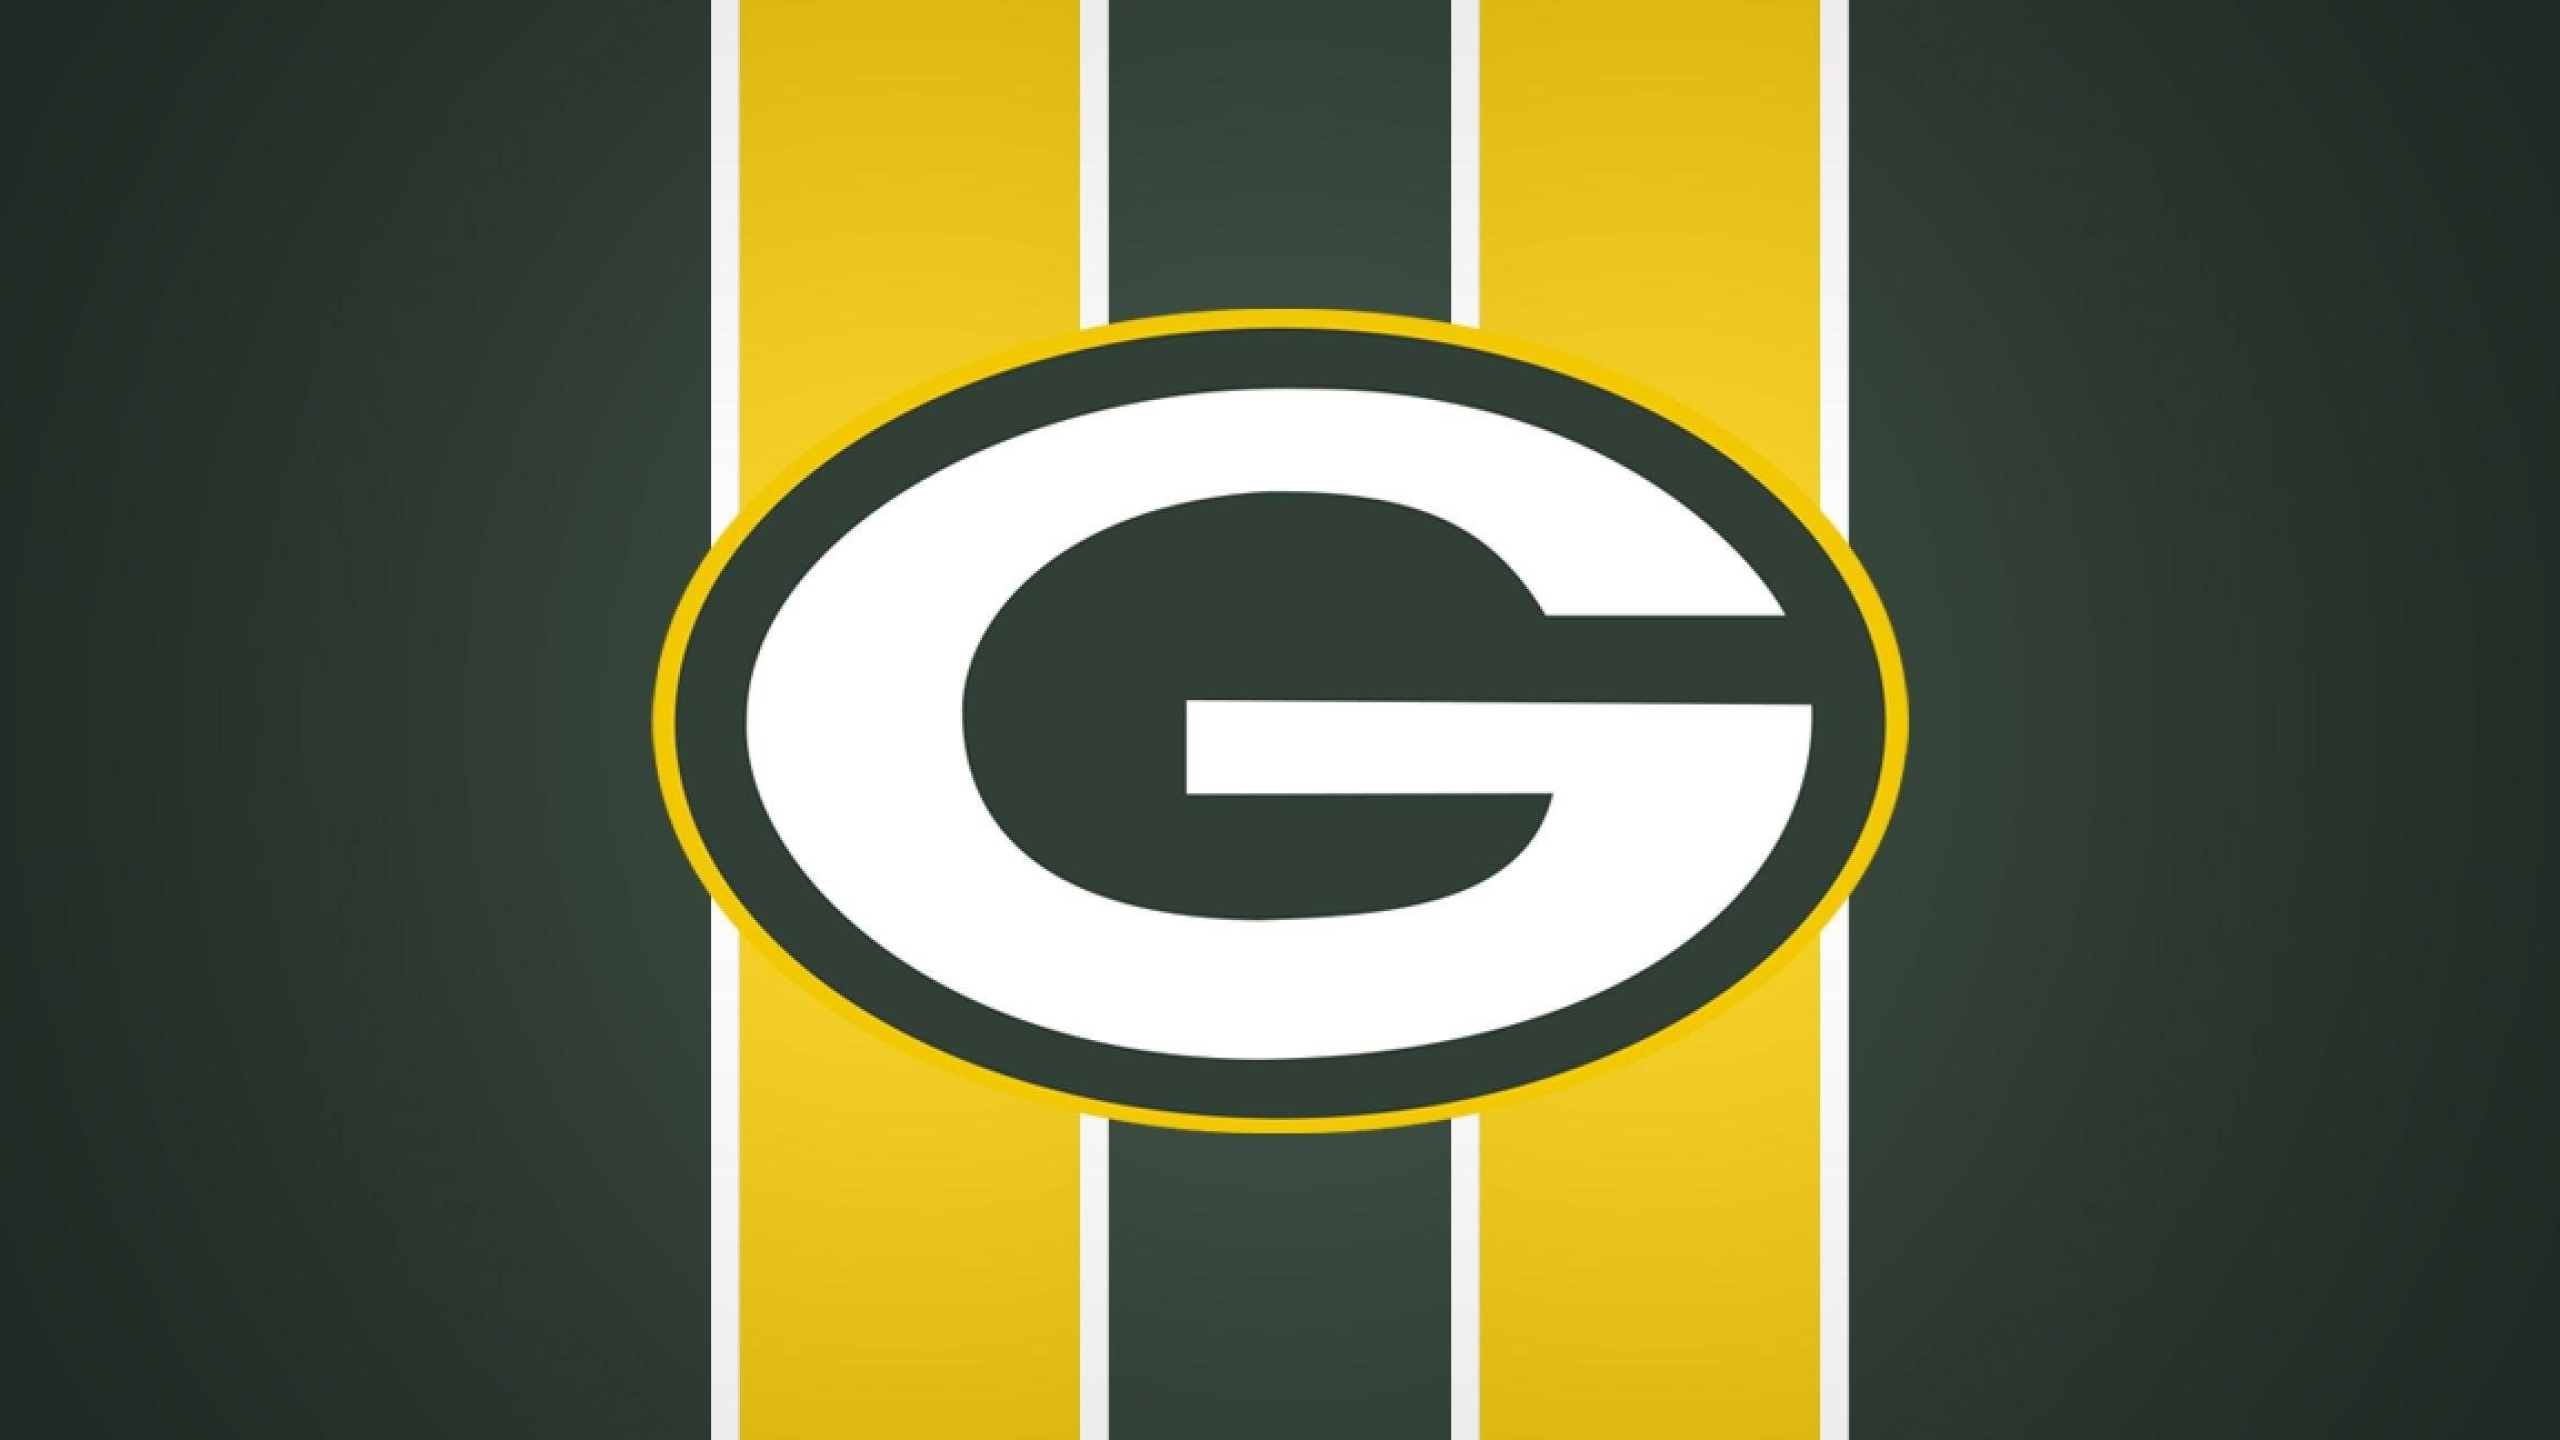 Green Bay Packers: AJ Dillon, An American football running back for the National Football League. 2560x1440 HD Wallpaper.